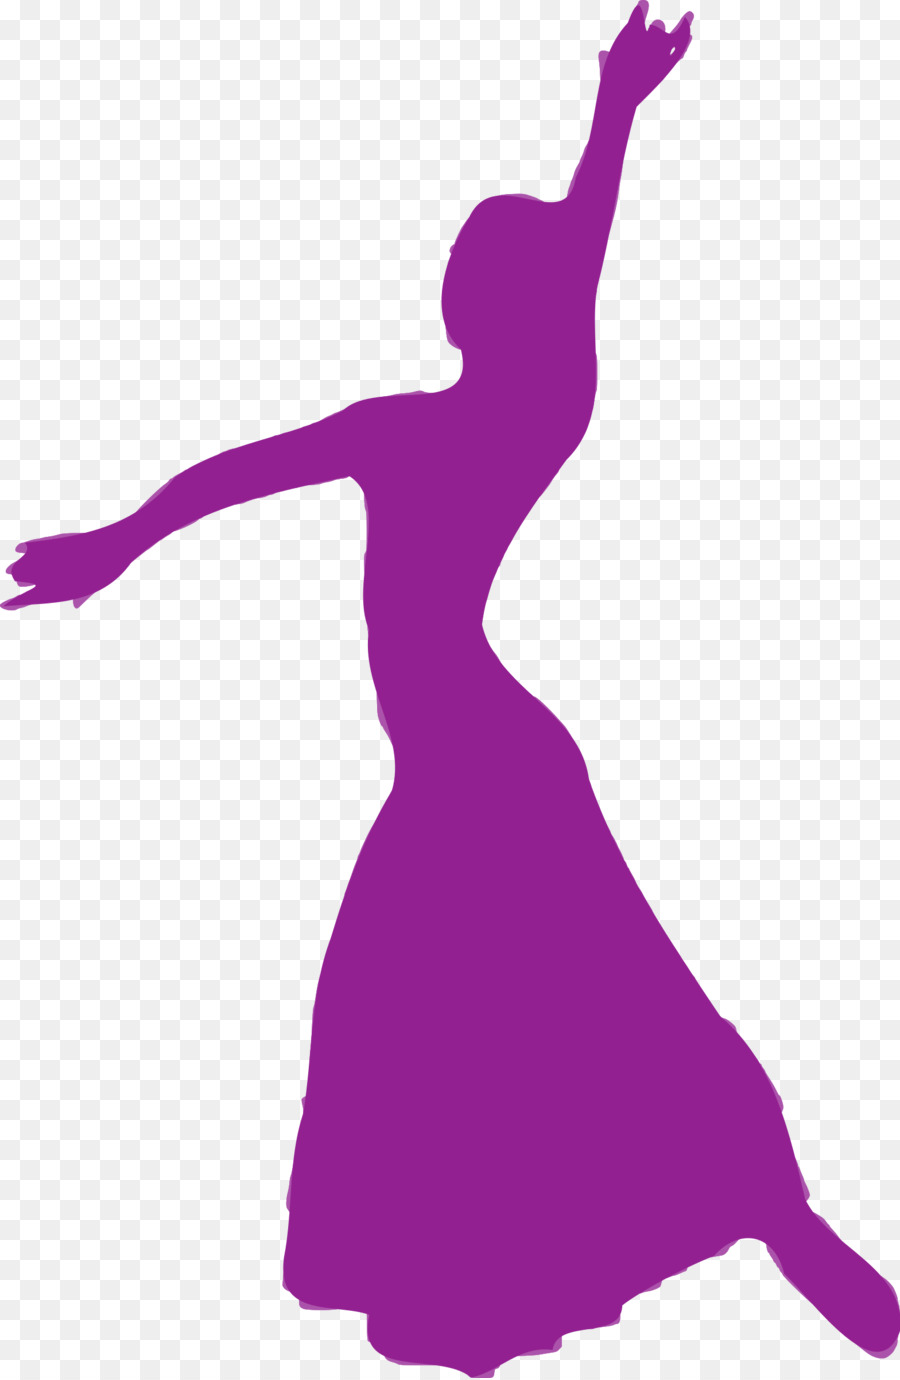 Ballet Dancer Silhouette Clip art - Dancers png download - 1568*2400 - Free Transparent Dance png Download.